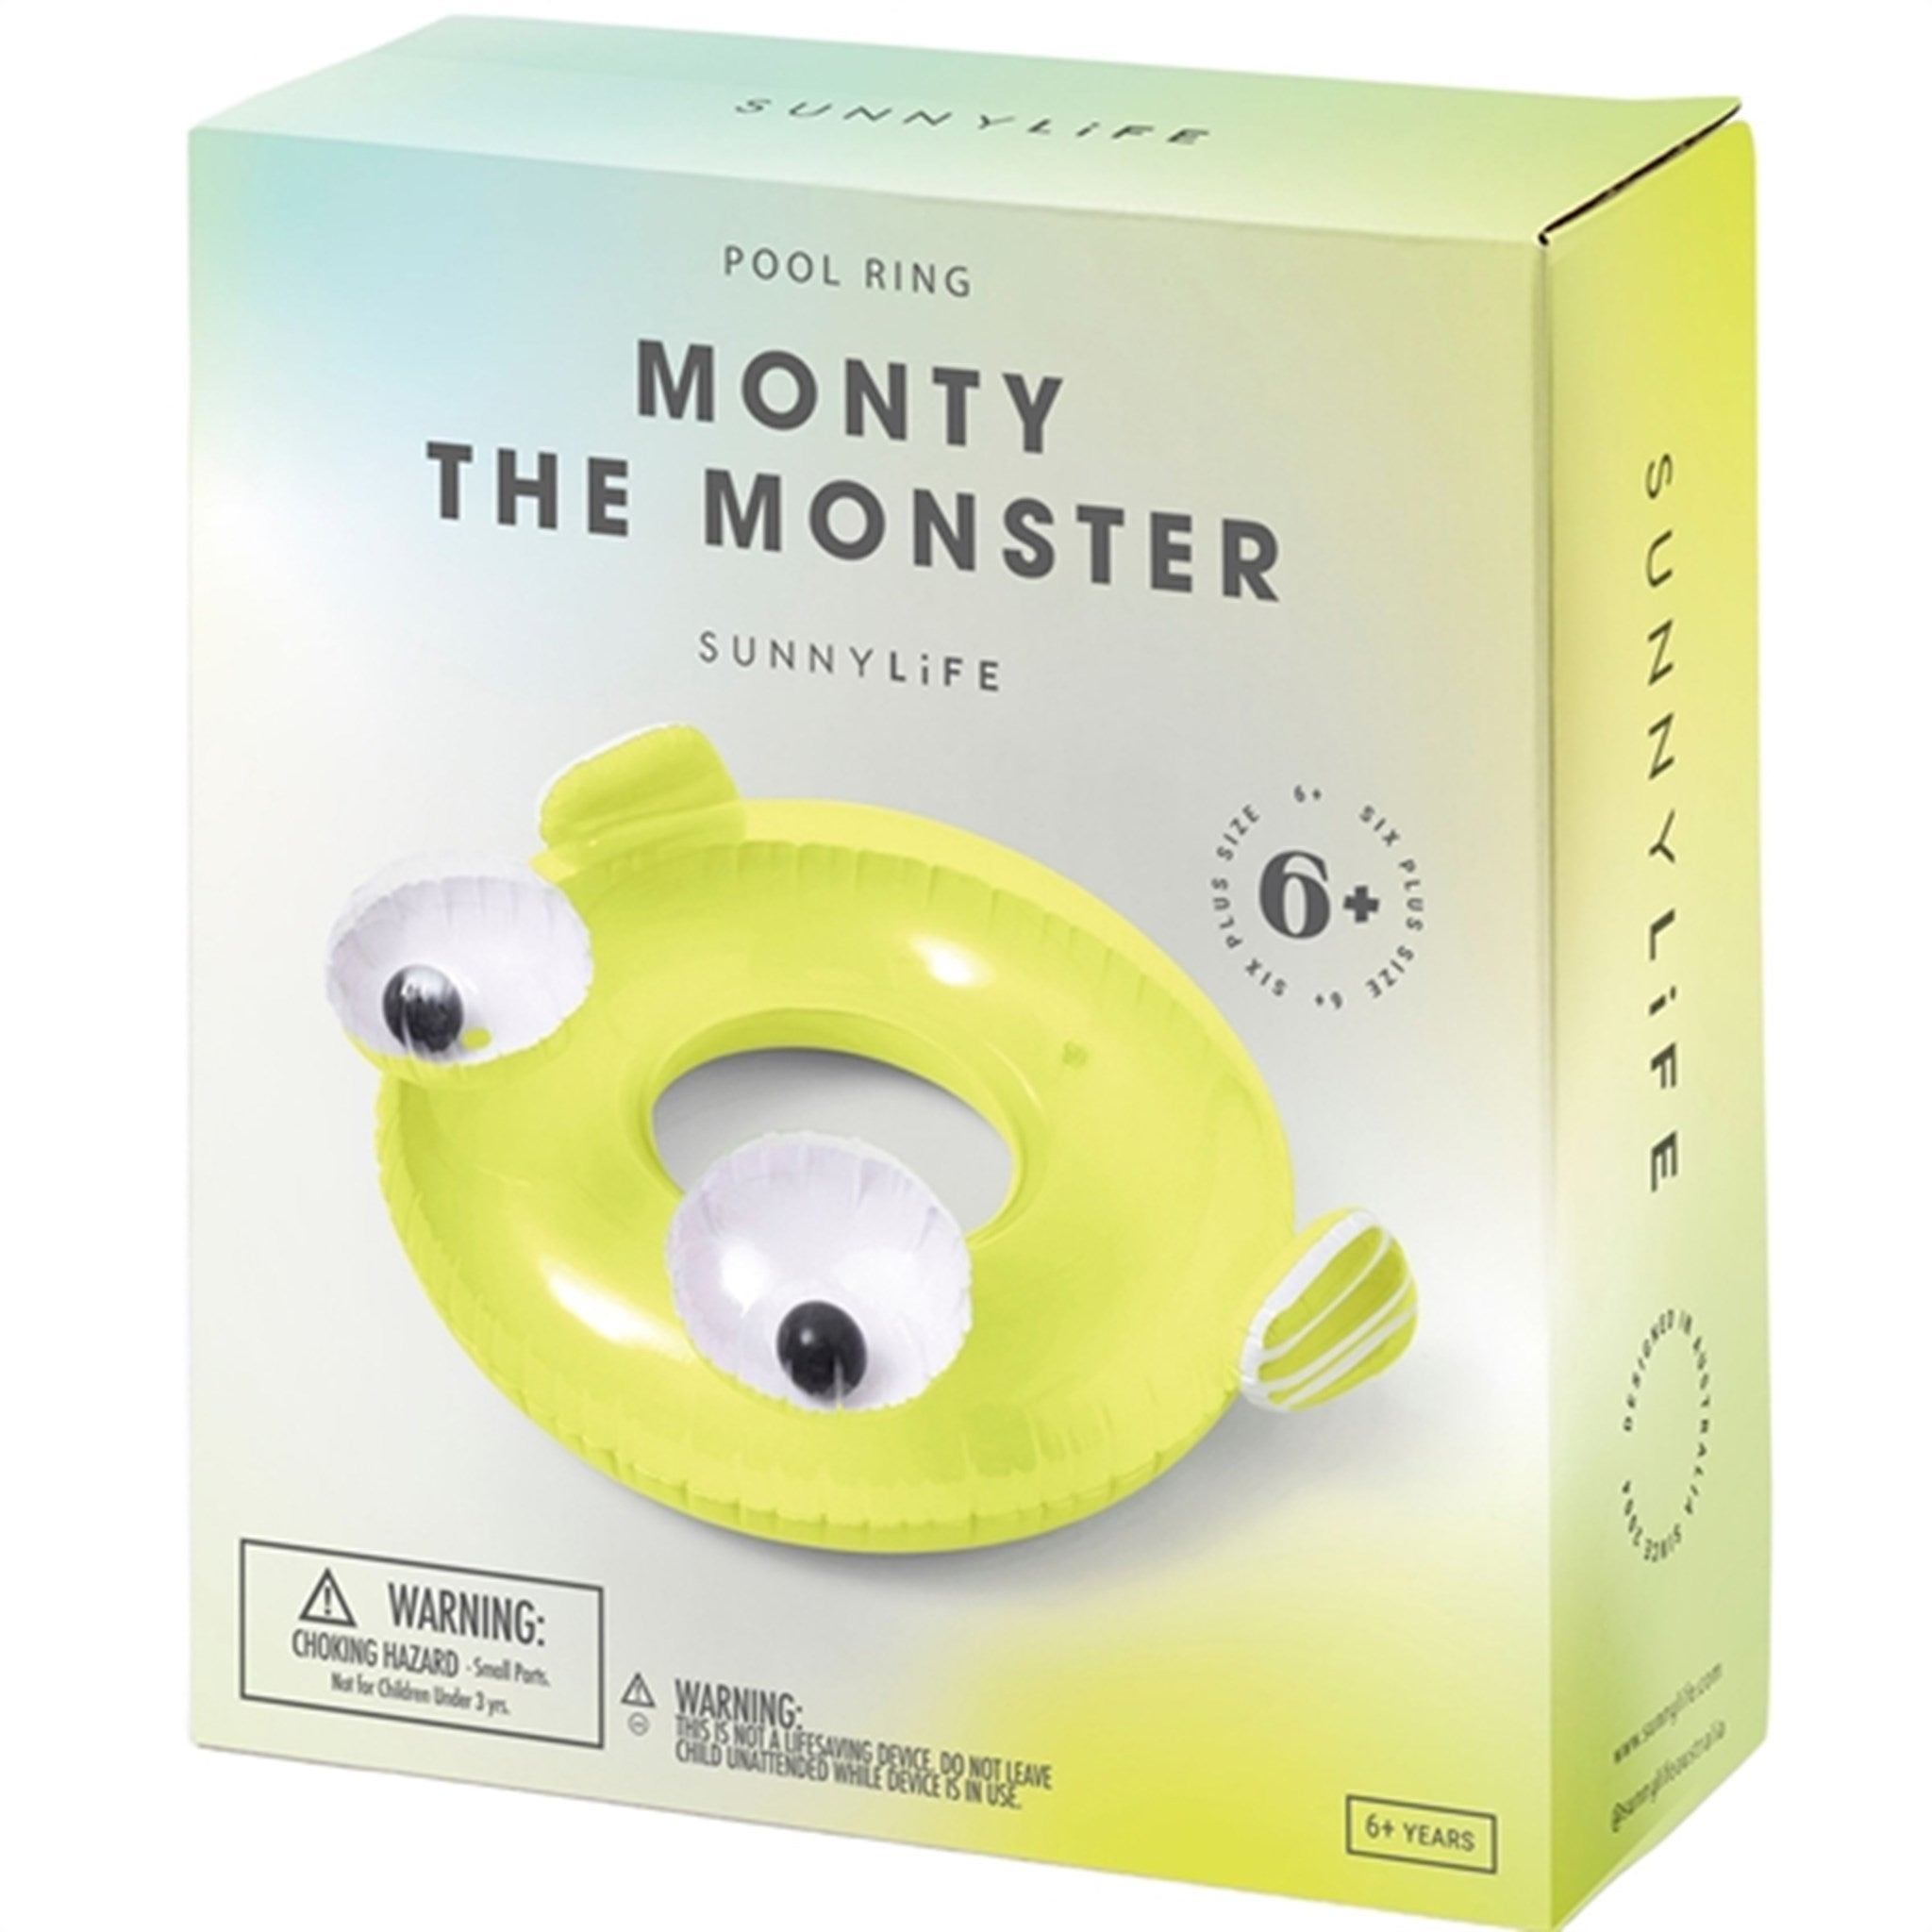 SunnyLife Pool Ring Monty the Monster 2